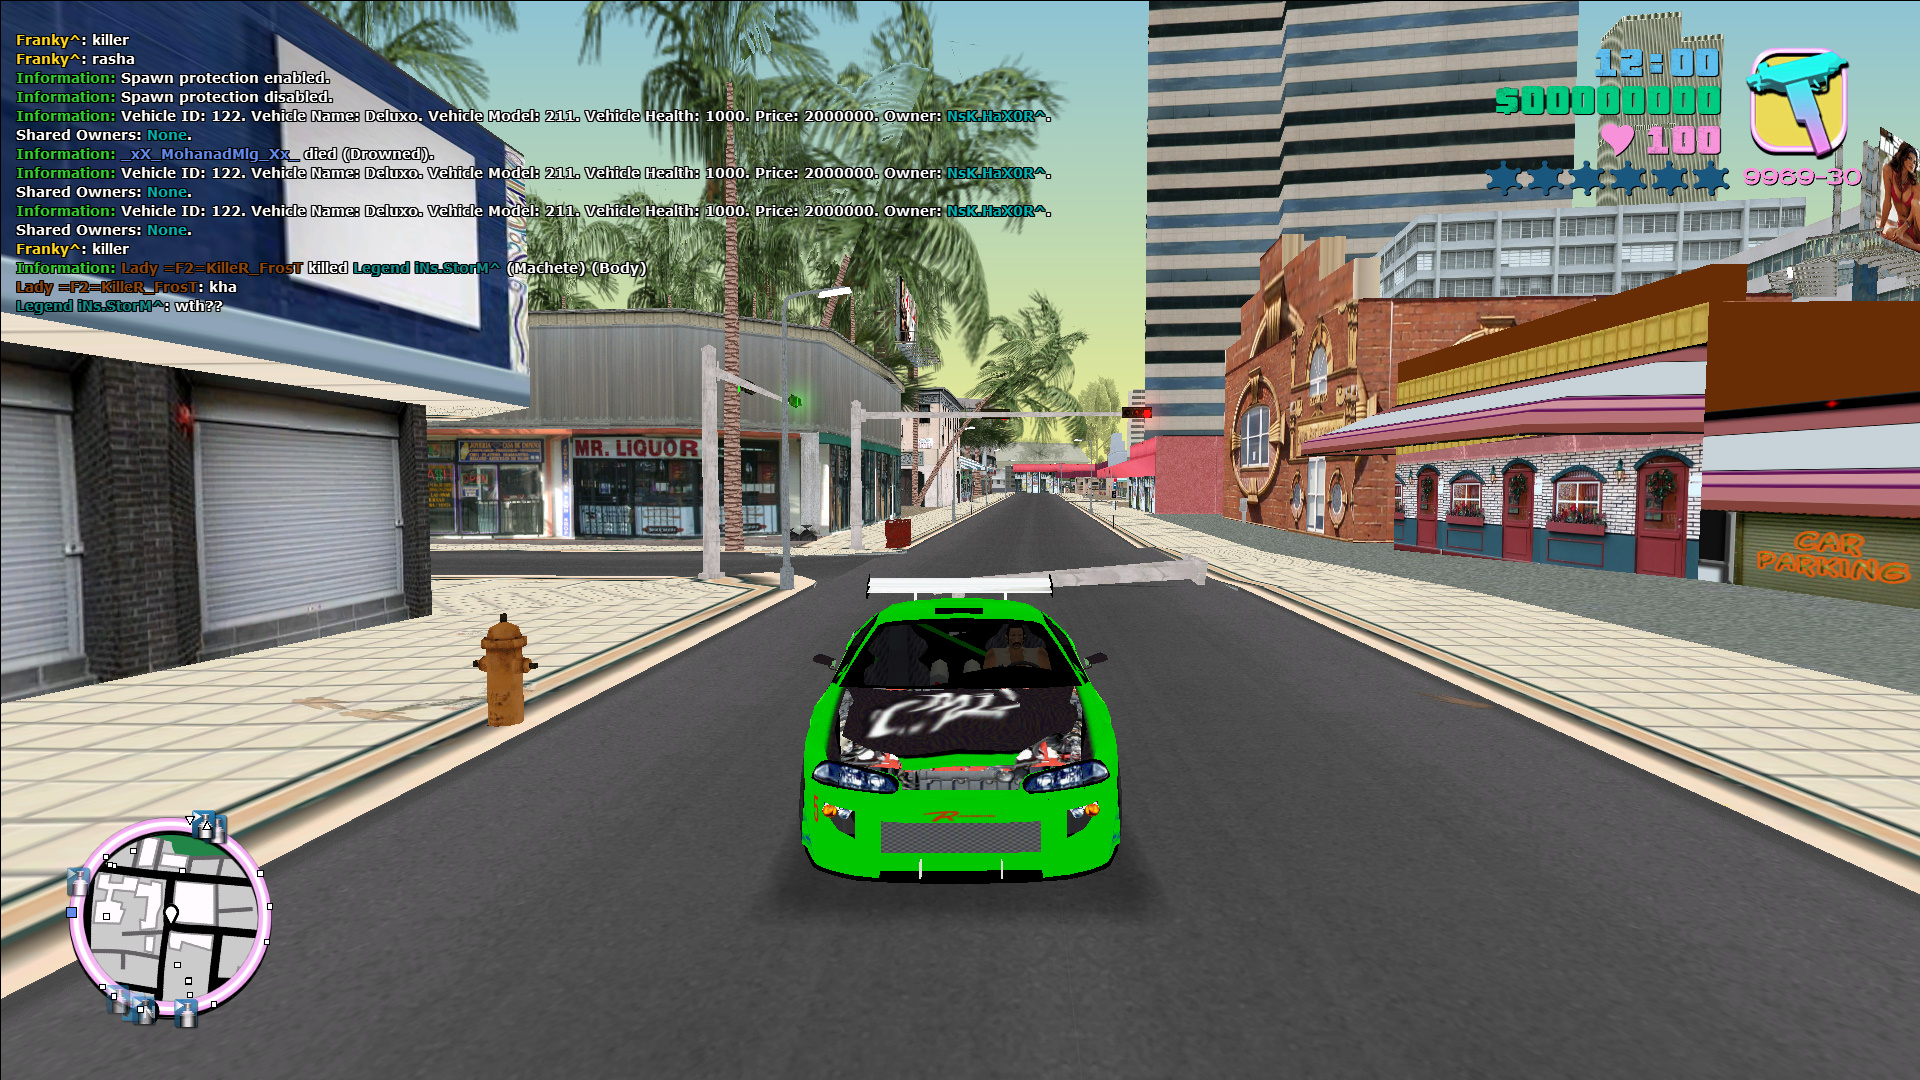 V2.0 file - GTA Vice City 4.0 mod for Grand Theft Auto: Vice City